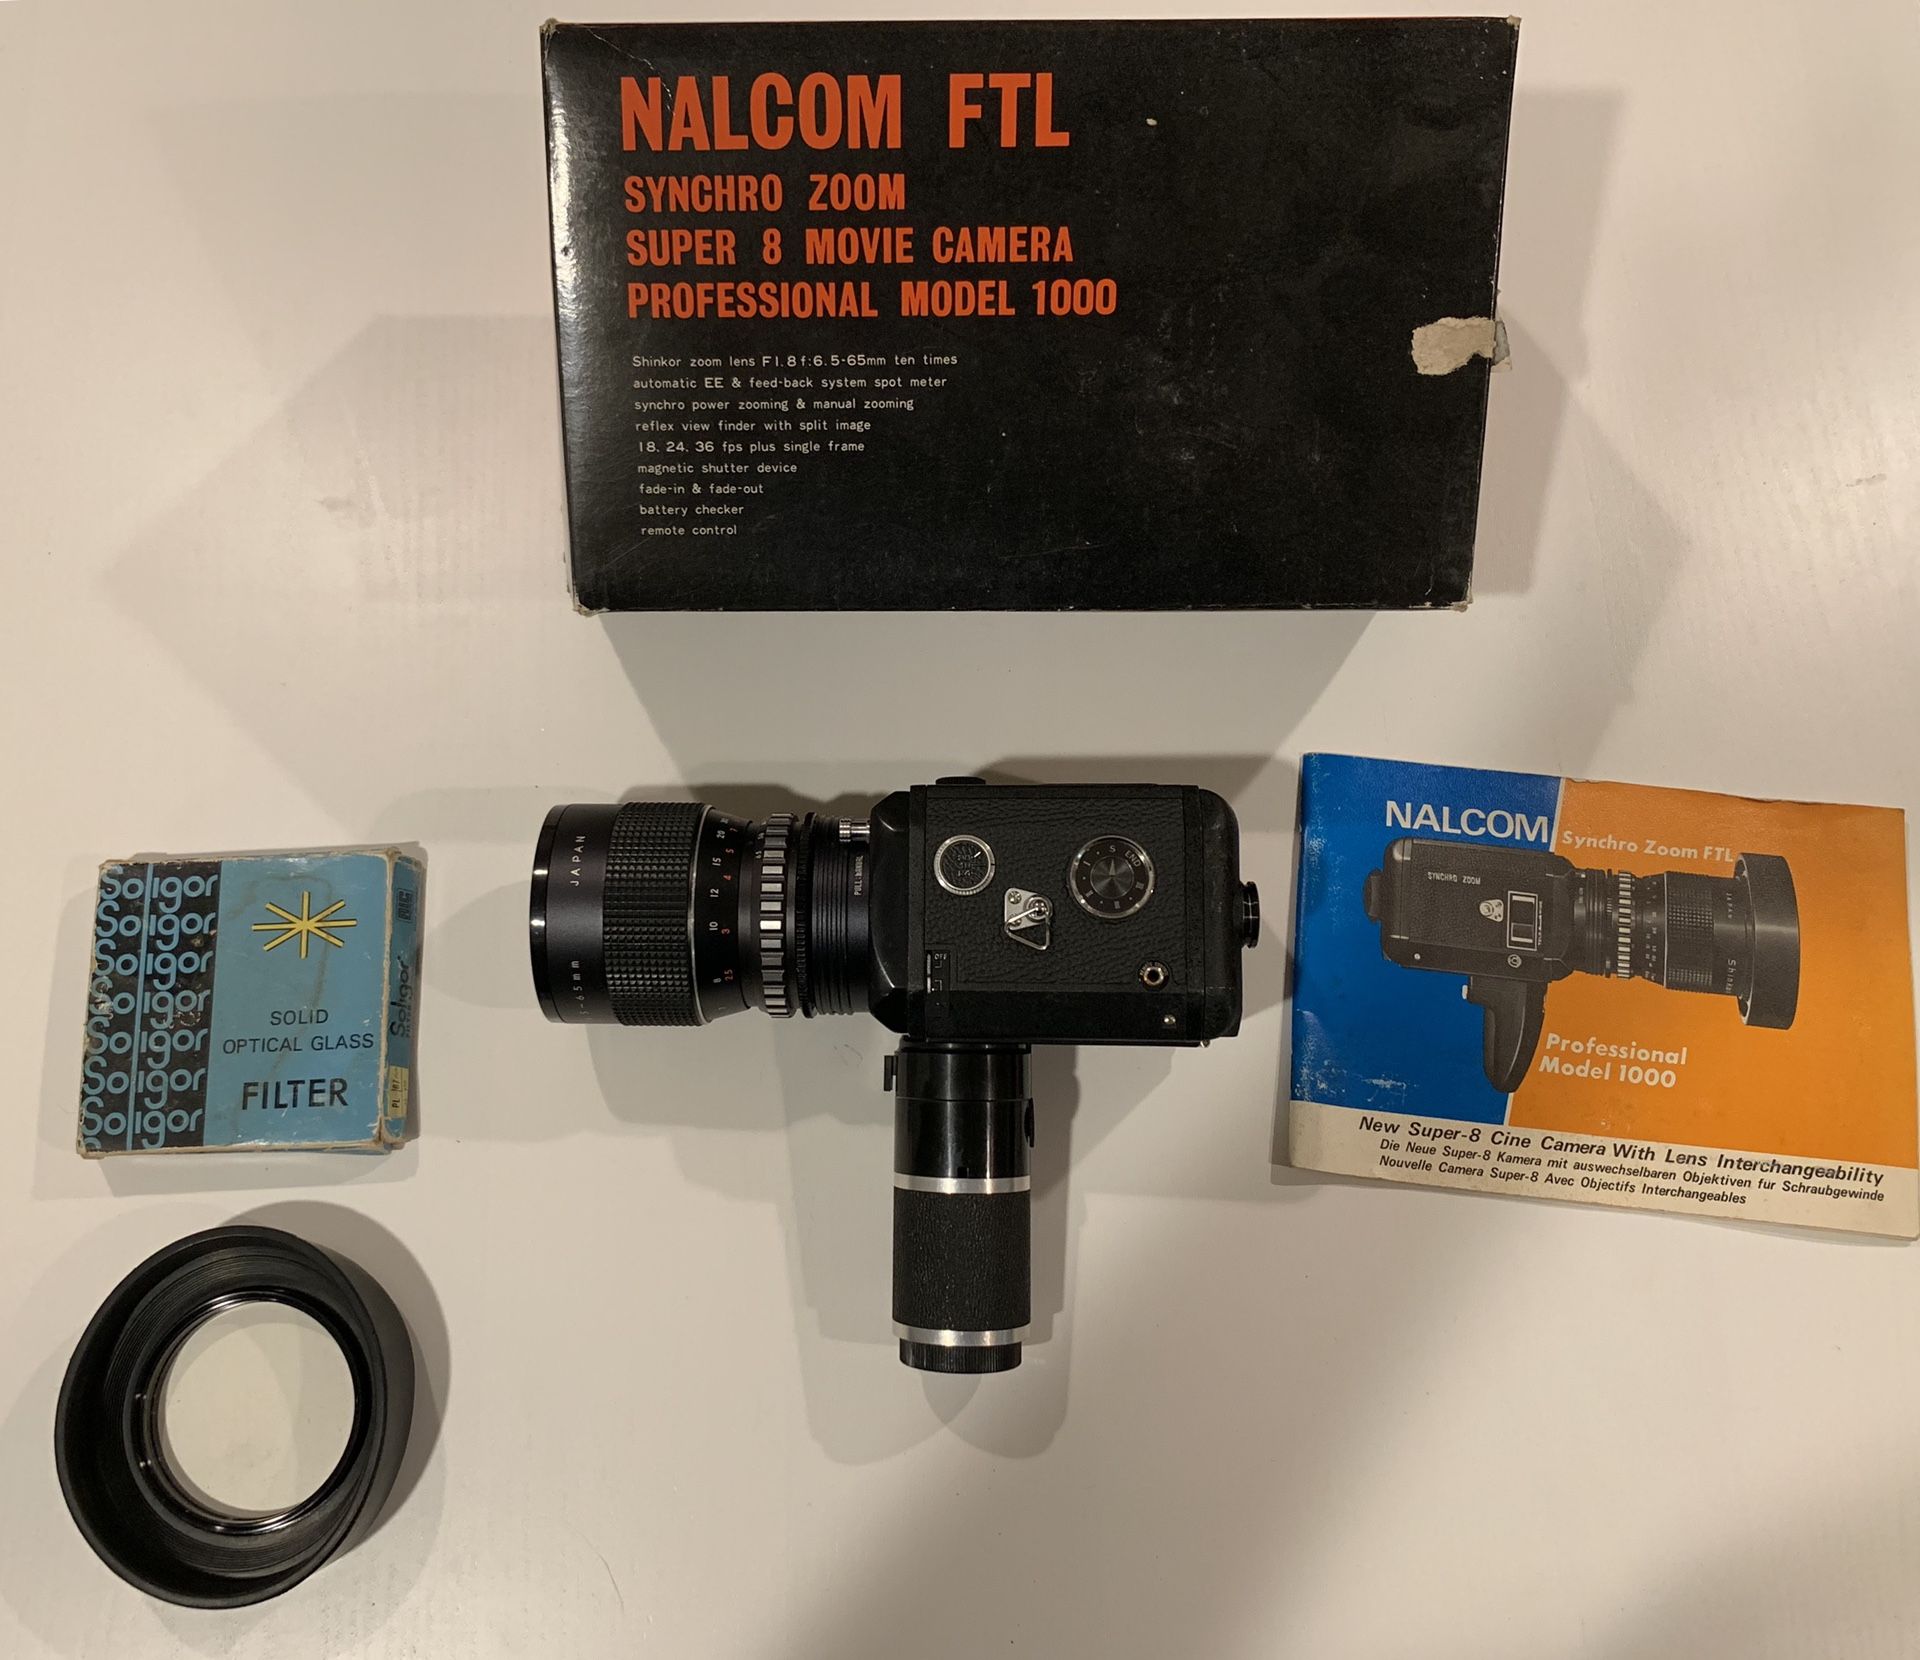 Nalcom FTL Synchro Zoom - super 8 camera